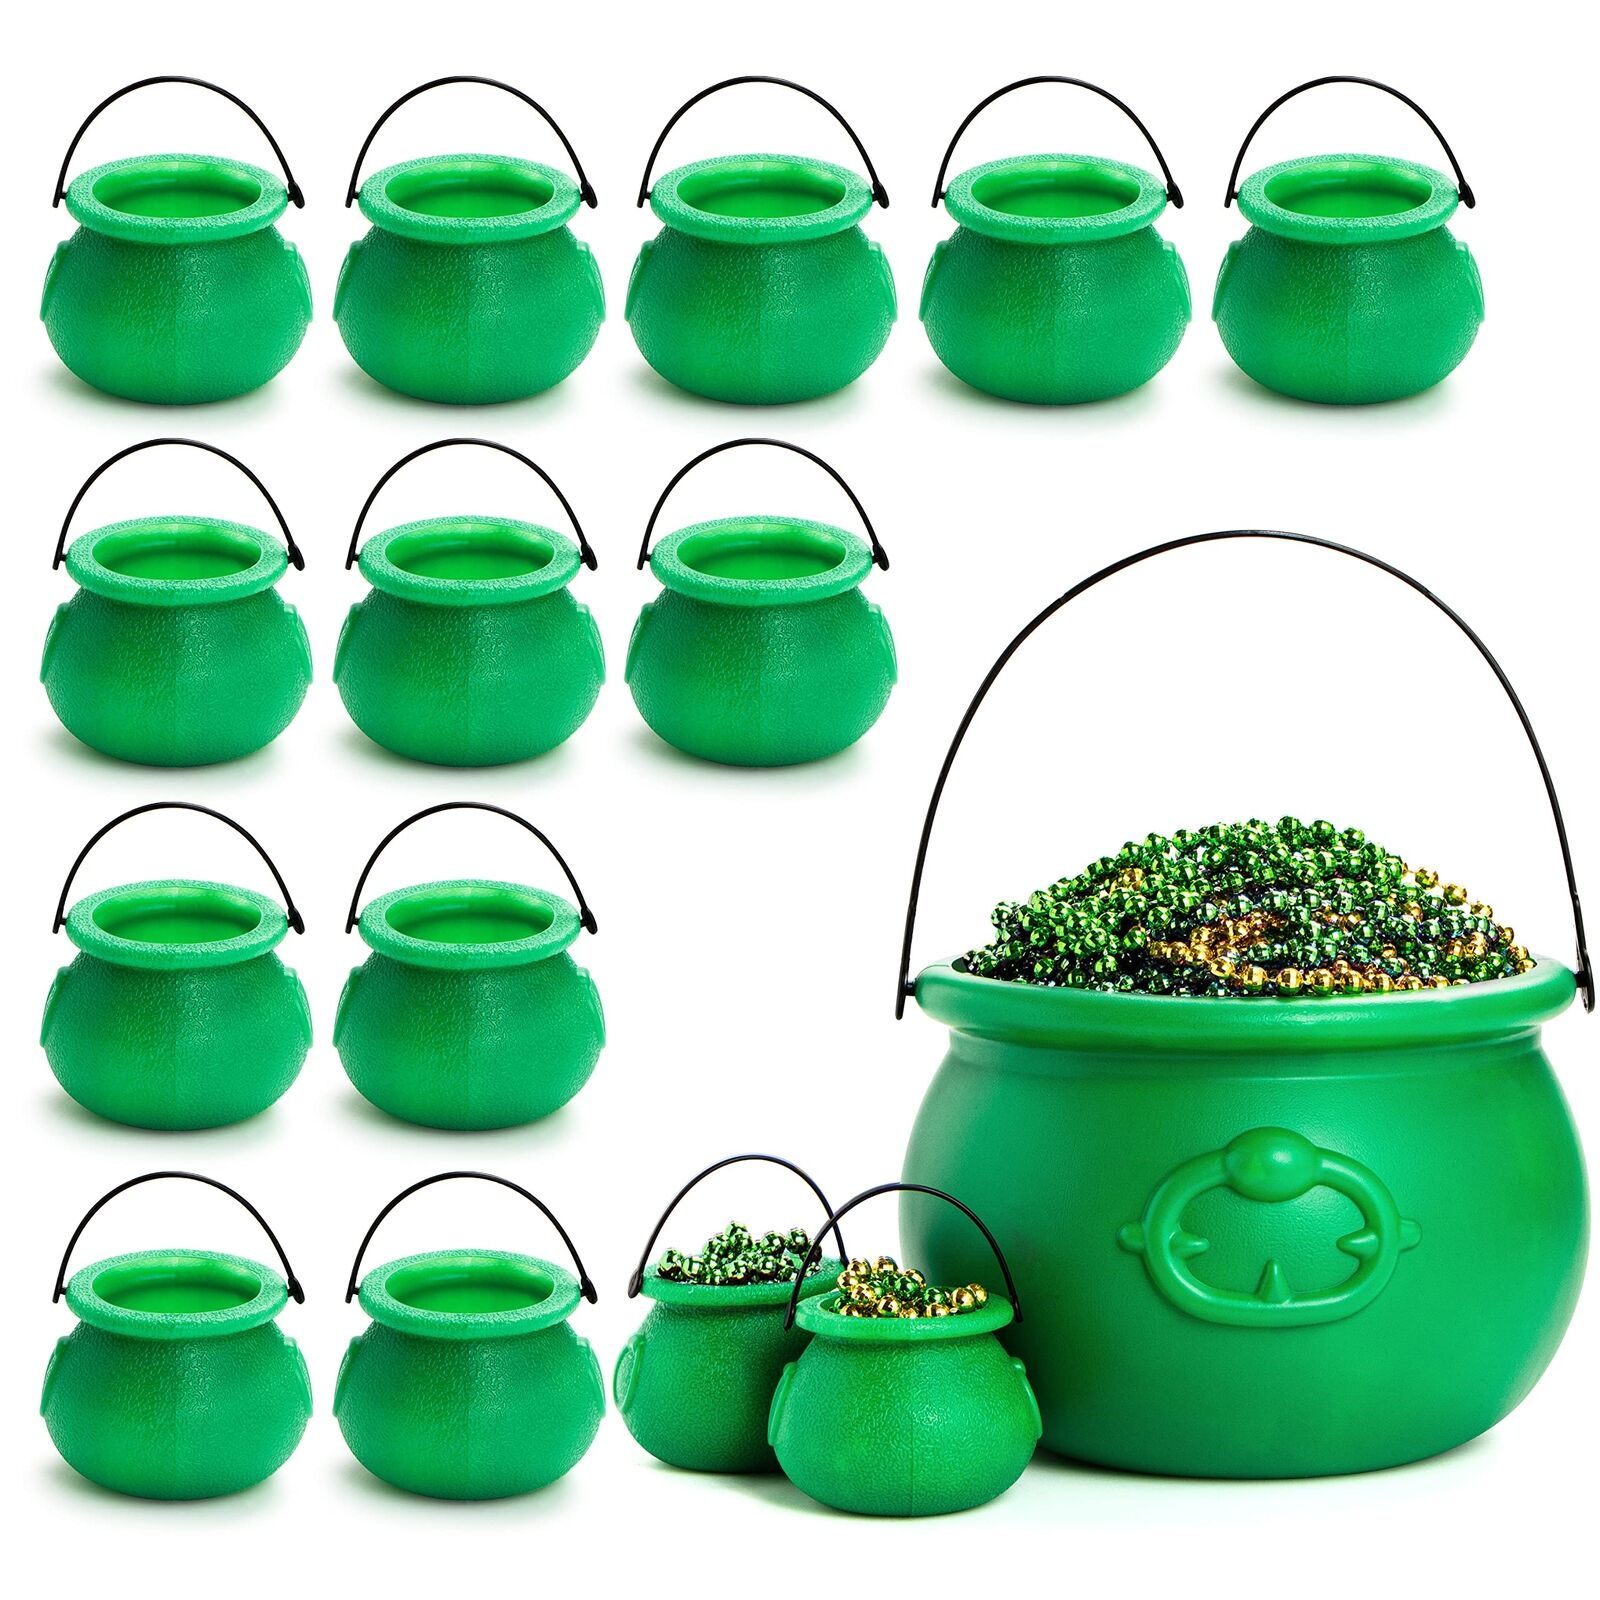 Syncfun 15Pcs St Patrick's Day Green Plastic Cauldron Kettles, for Party Favors